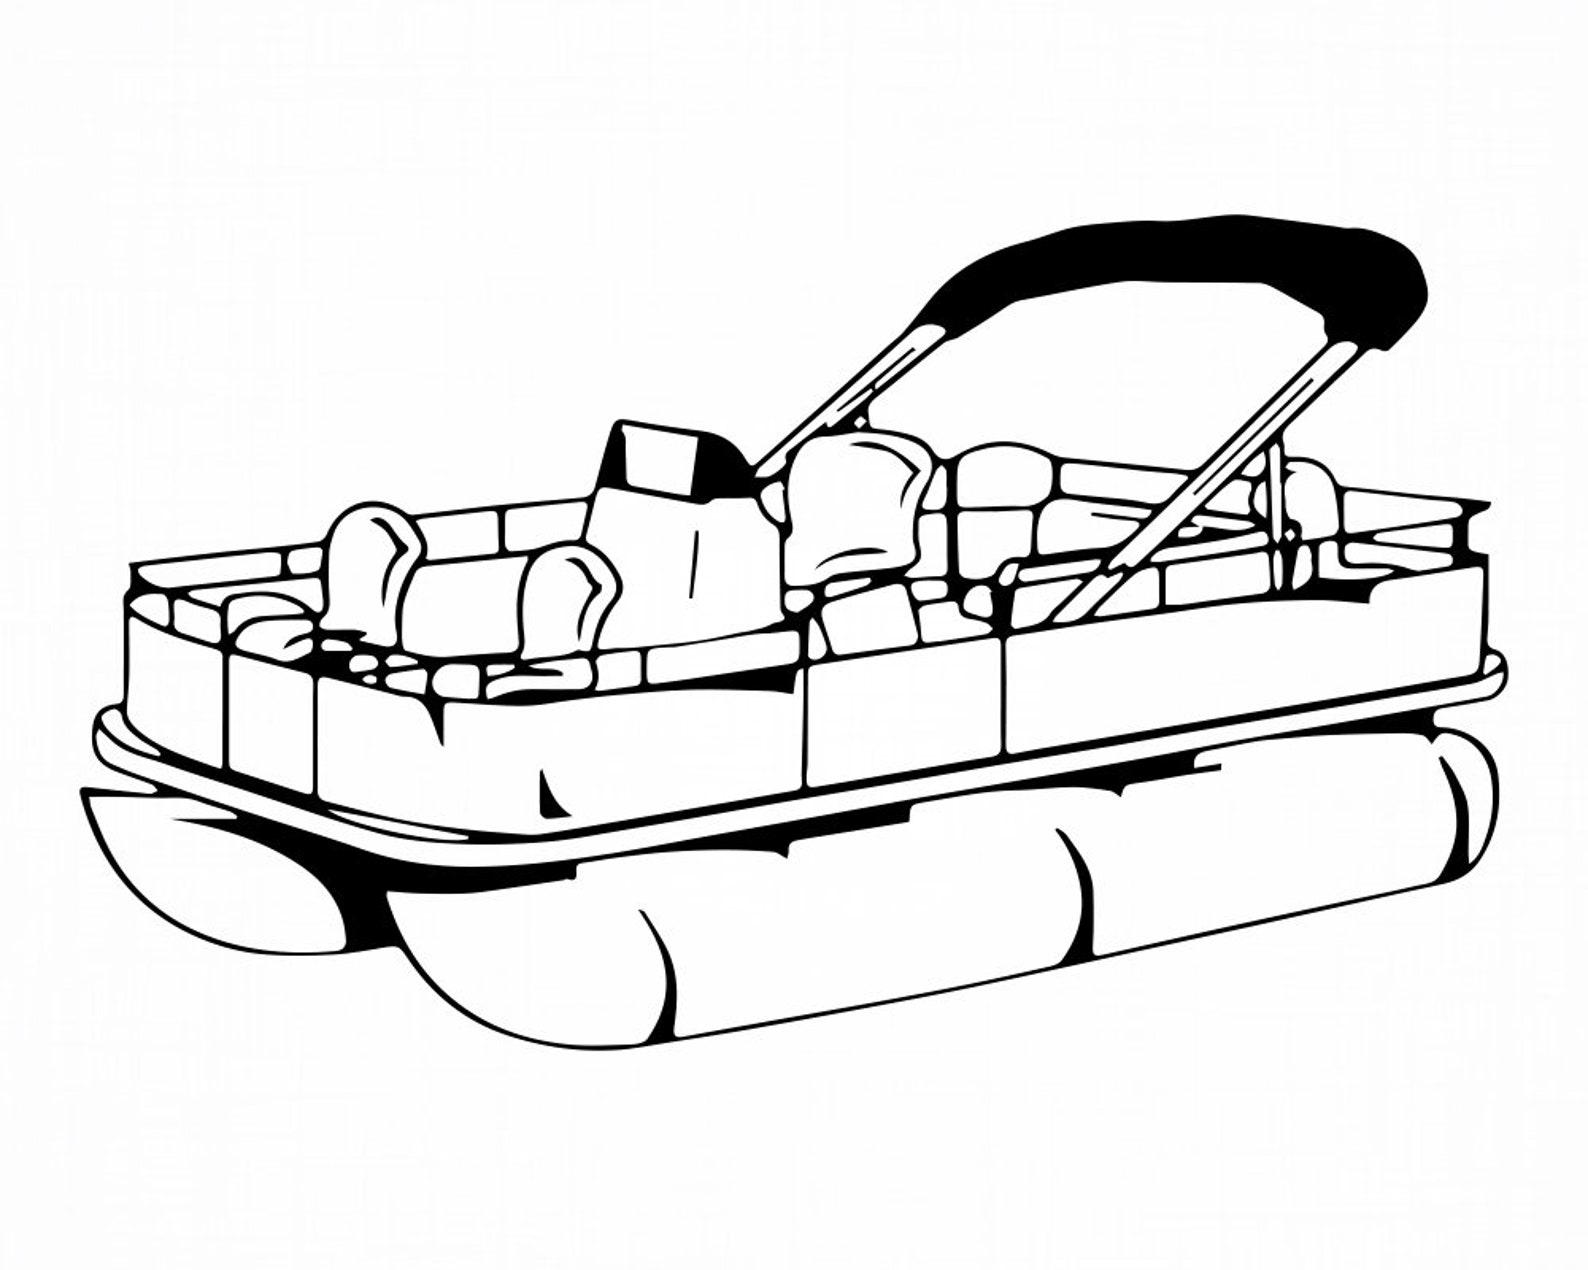 Fun Pontoon Boat SVG